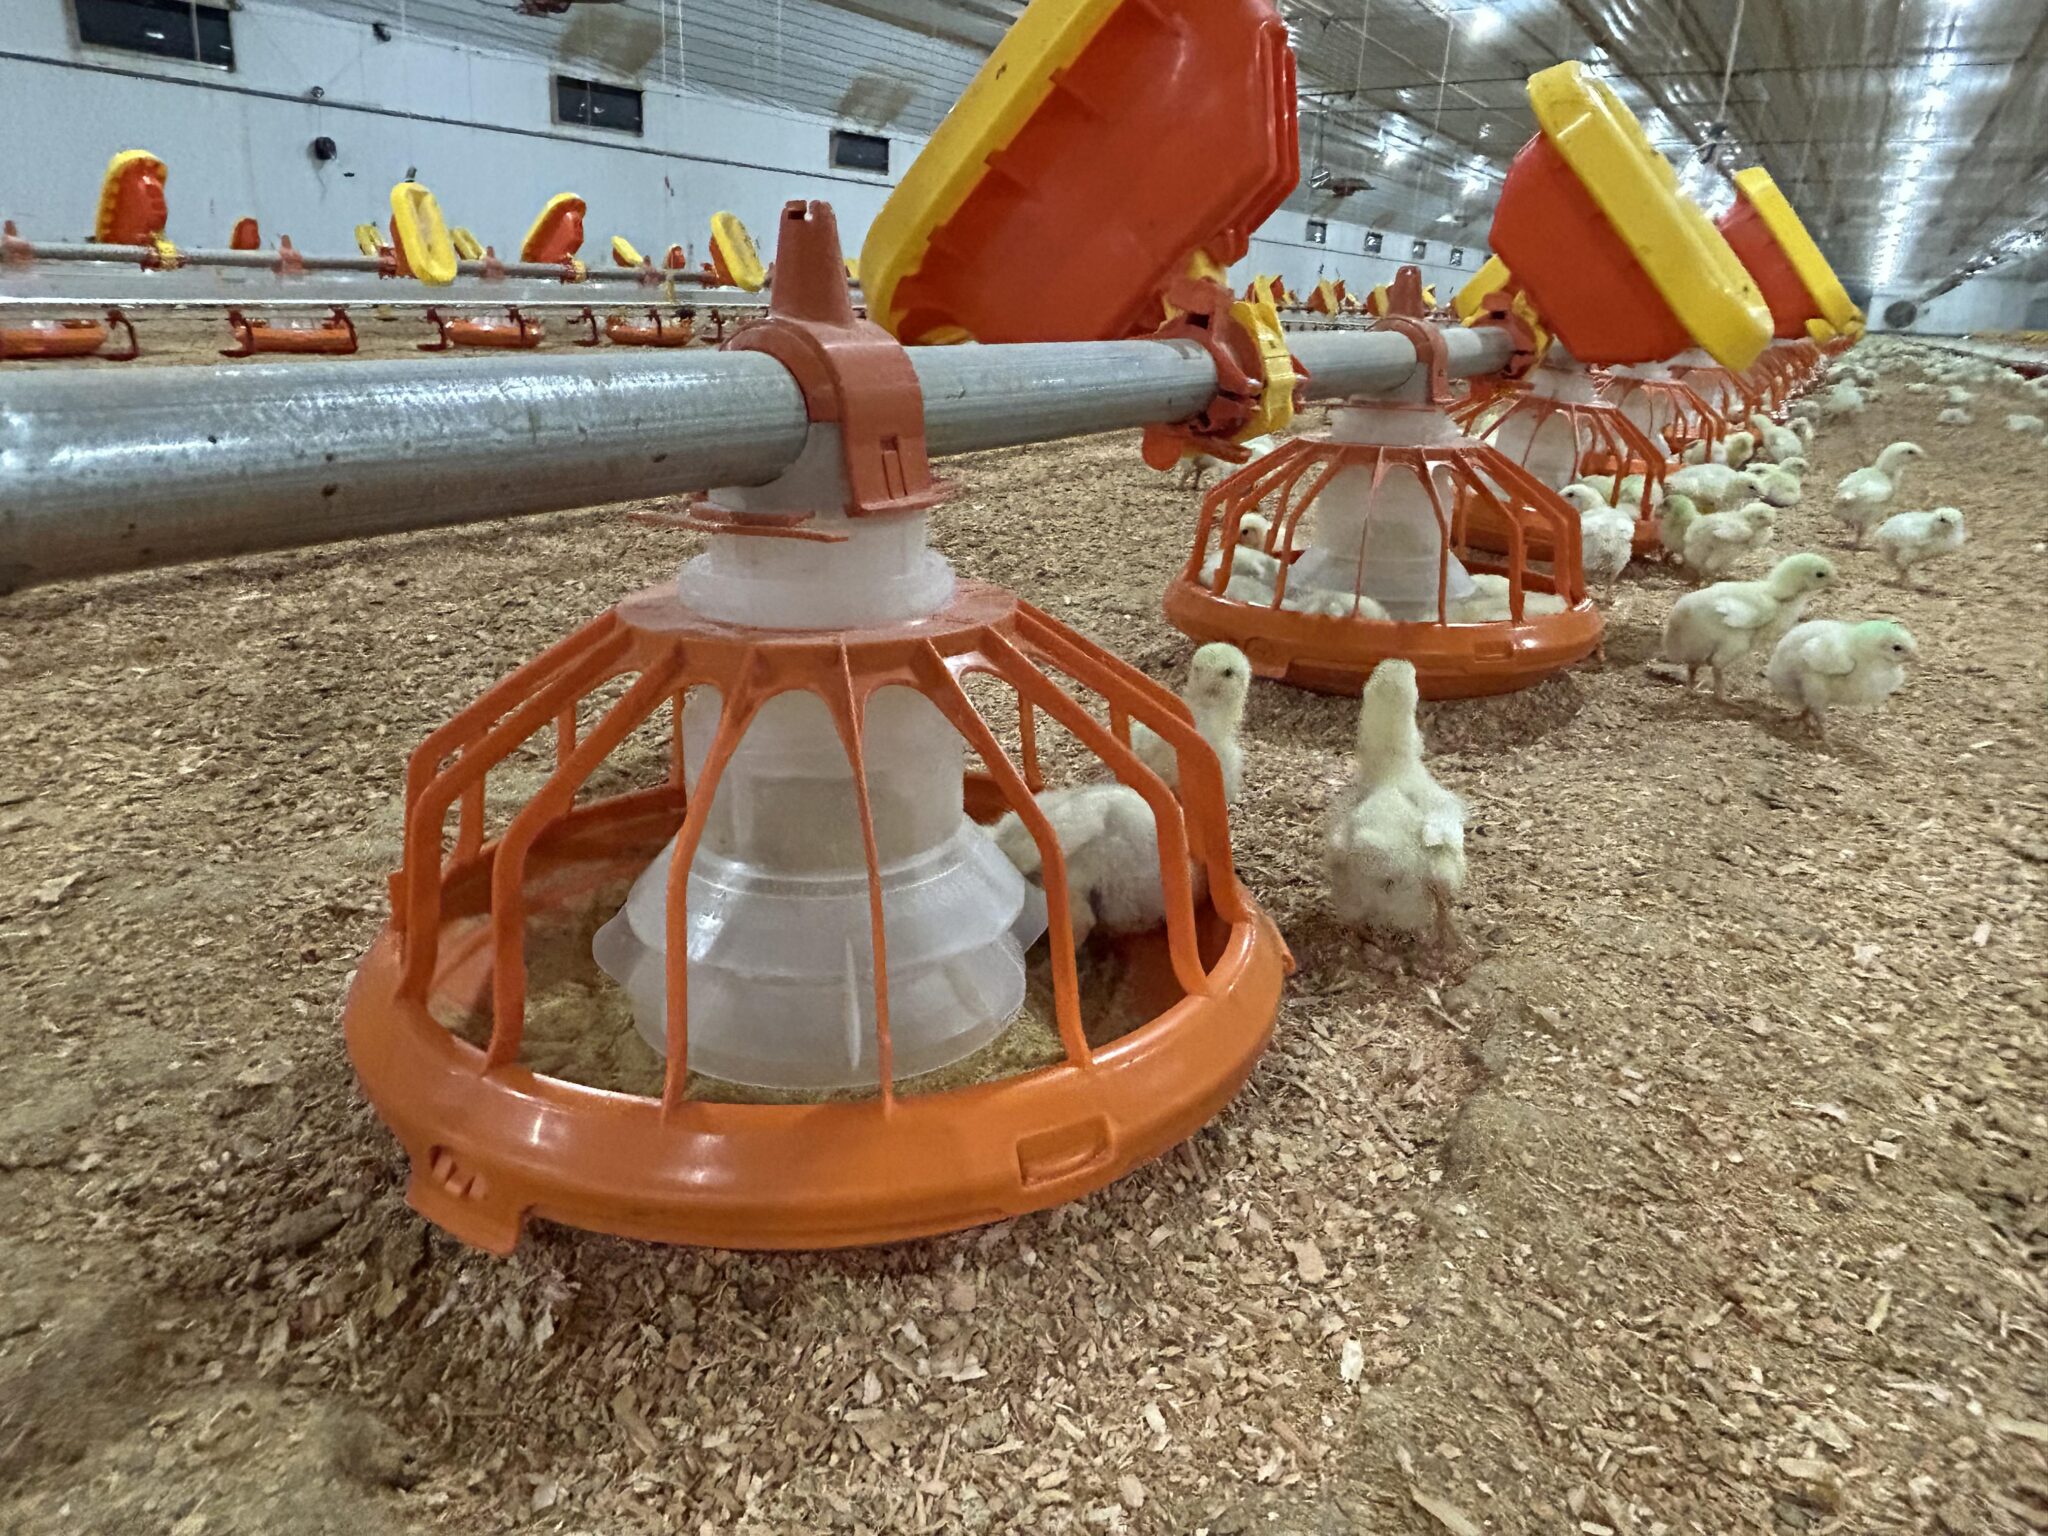 Grant Stringer - Chicken industry officials host tour of mega chicken facility as part of a lobbying effort